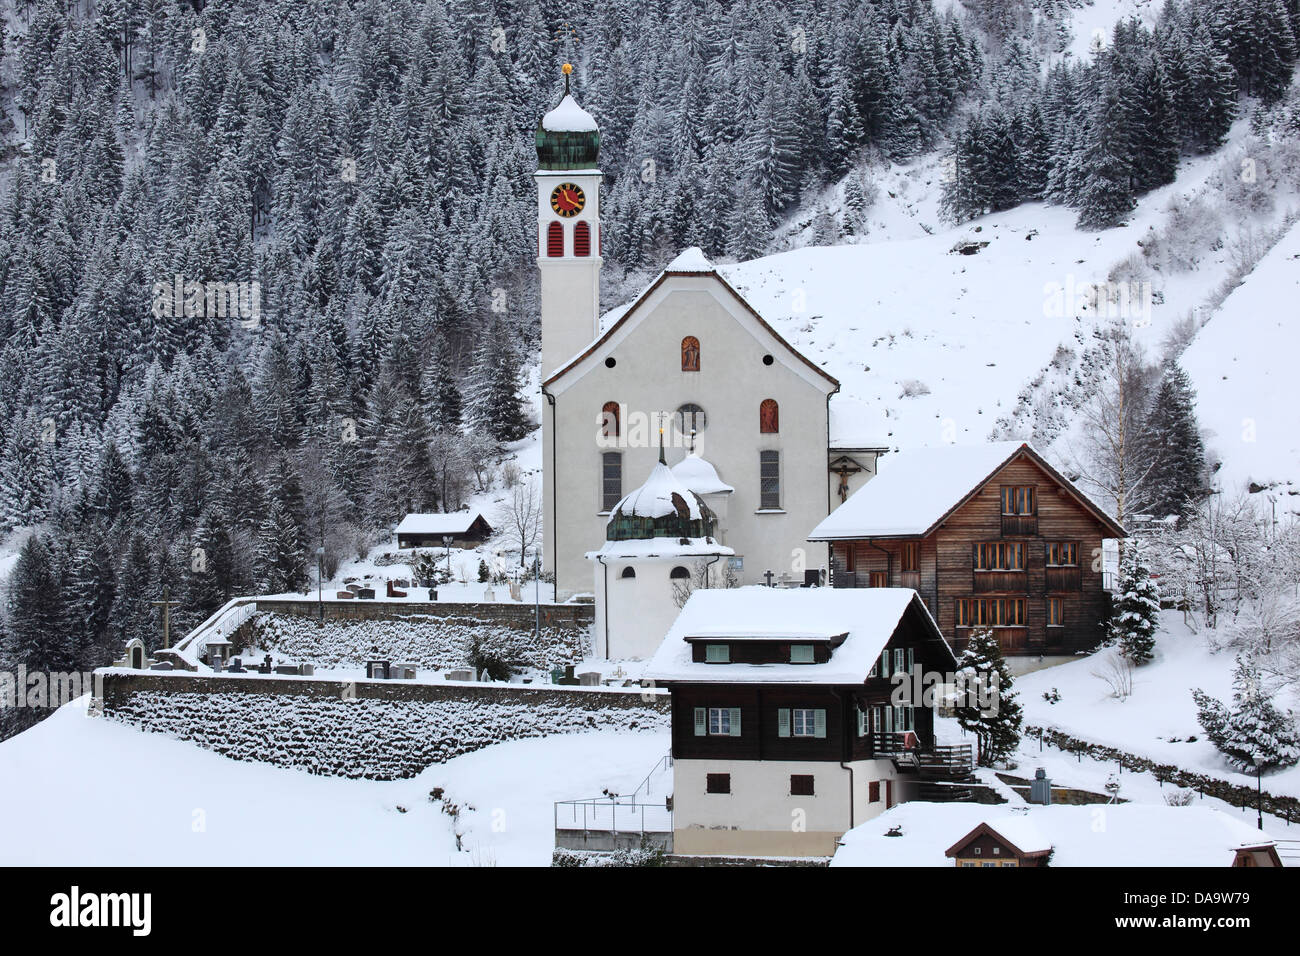 Gotthard, Gotthard route, chapel, Catholic, church, religion, snow, Switzerland, Europe, Uri, Wassen, winter Stock Photo